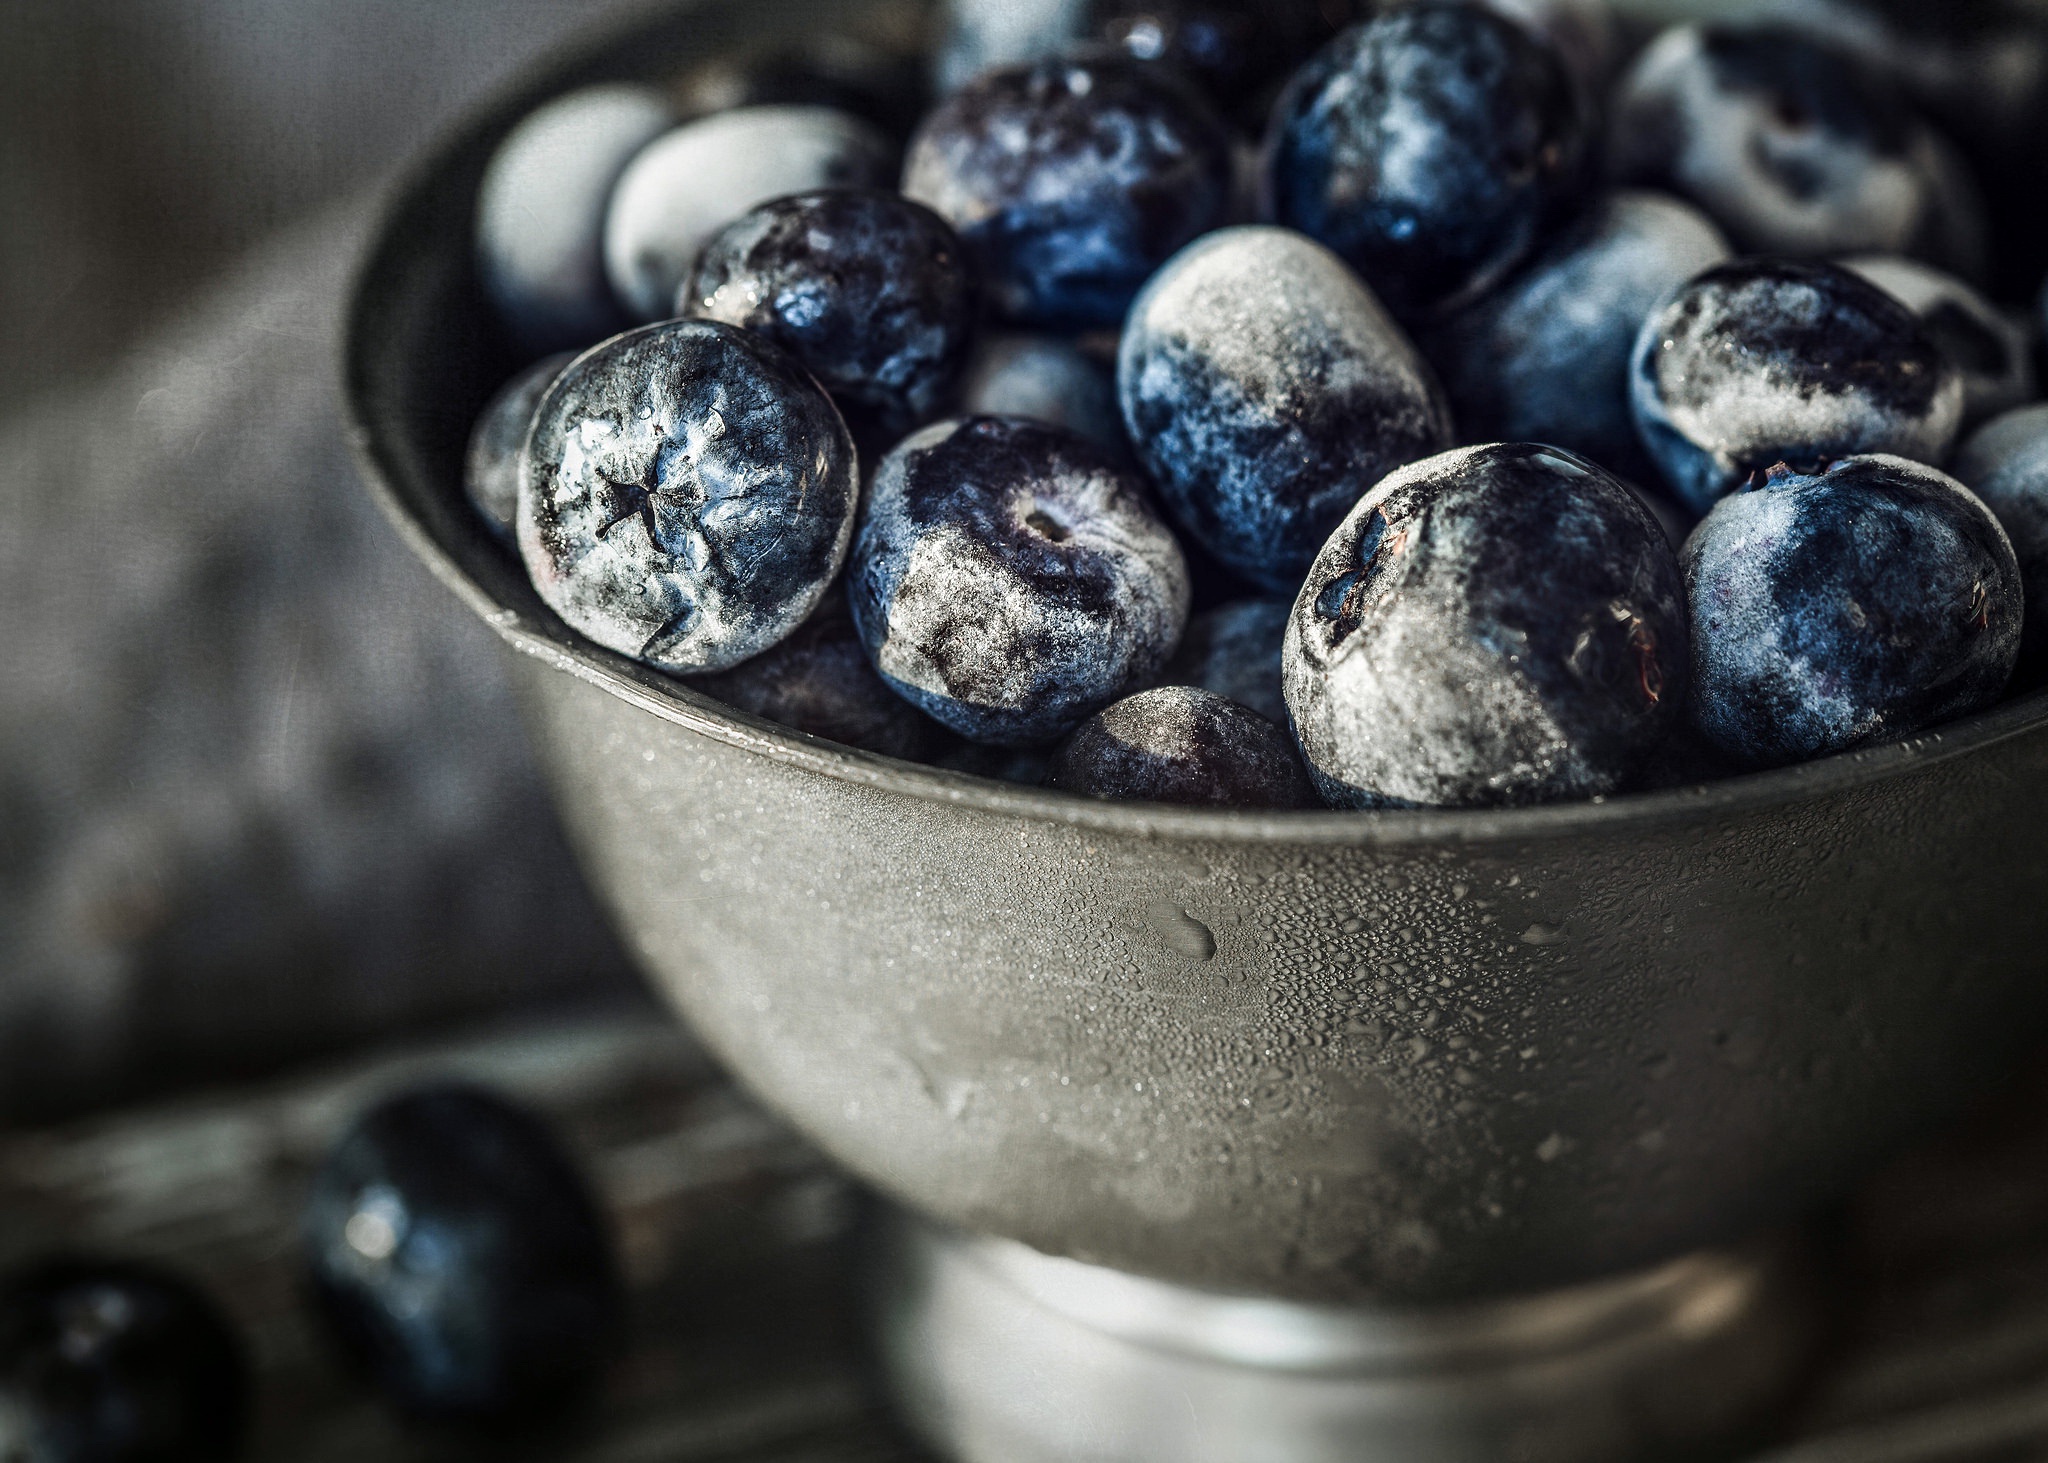 General 2048x1463 fruit berries food blueberries macro bowls selective coloring blue